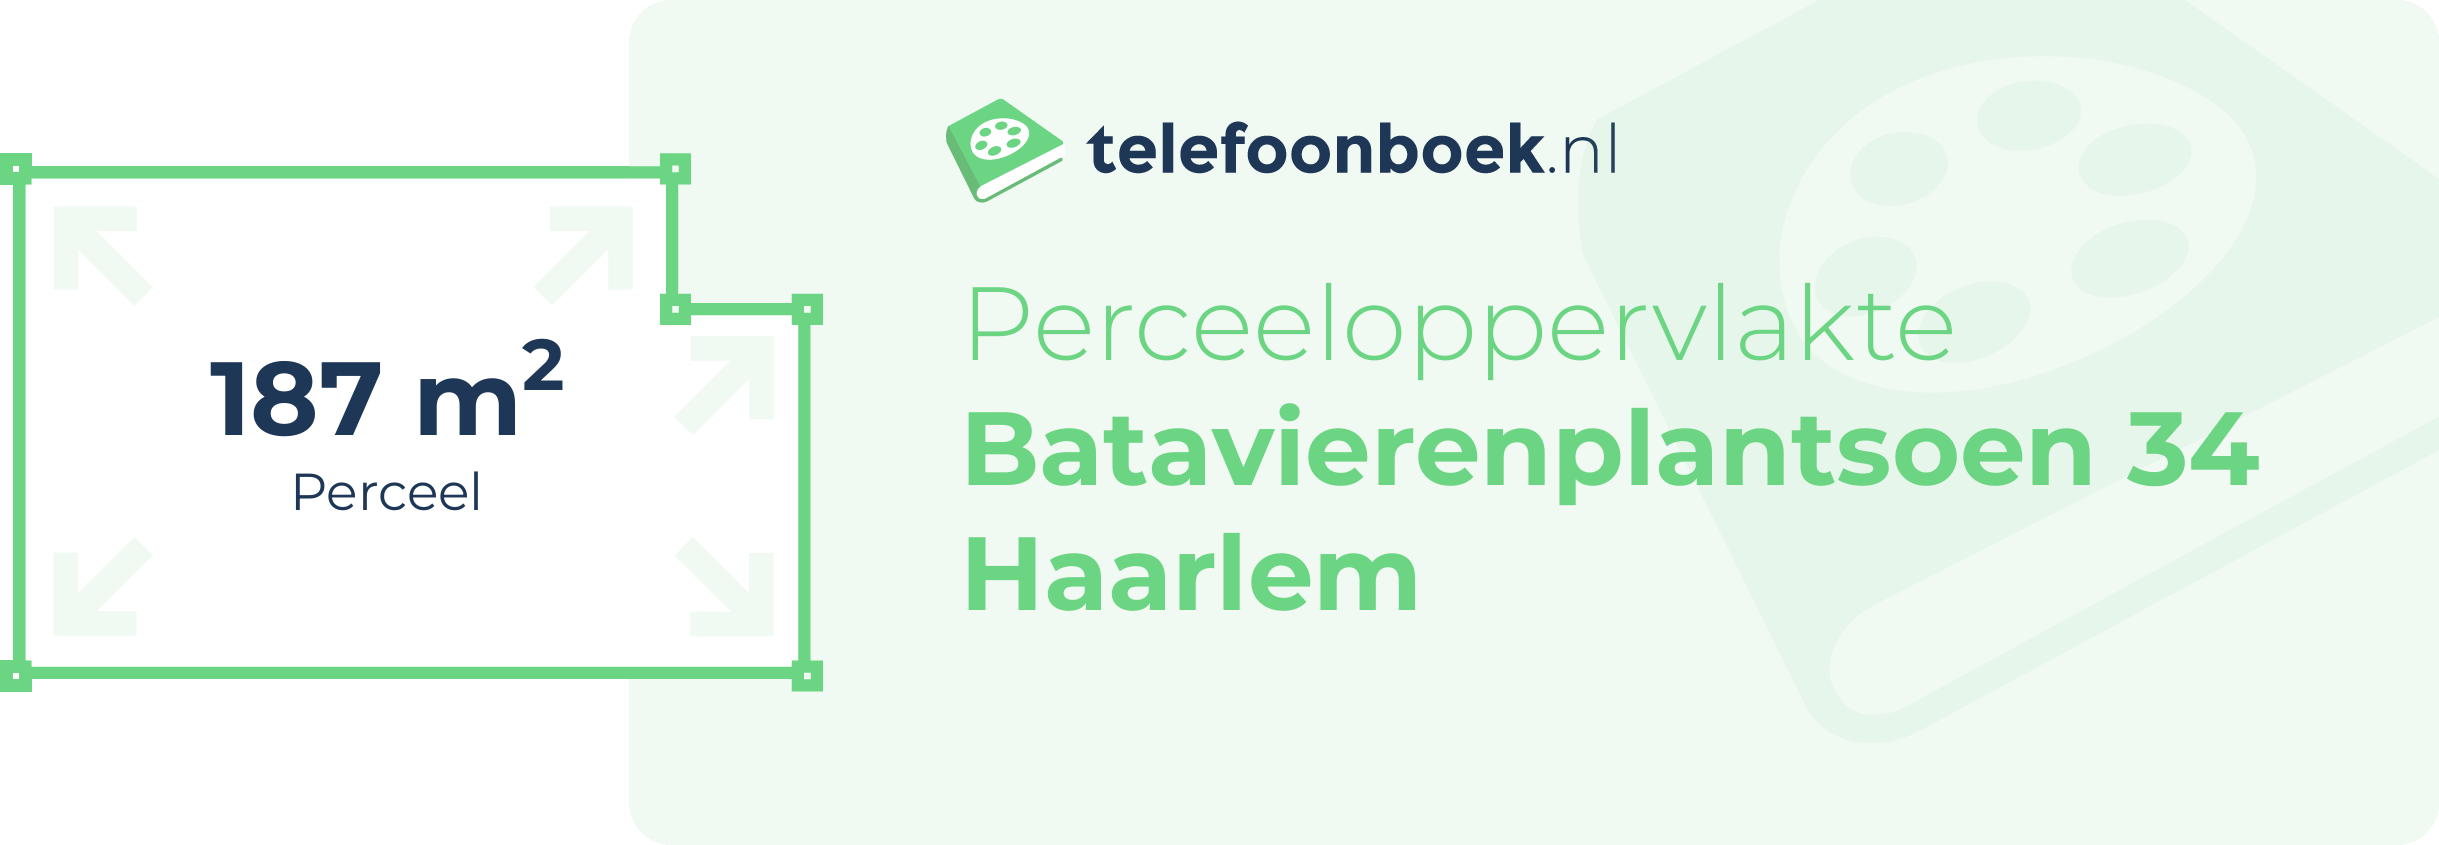 Perceeloppervlakte Batavierenplantsoen 34 Haarlem